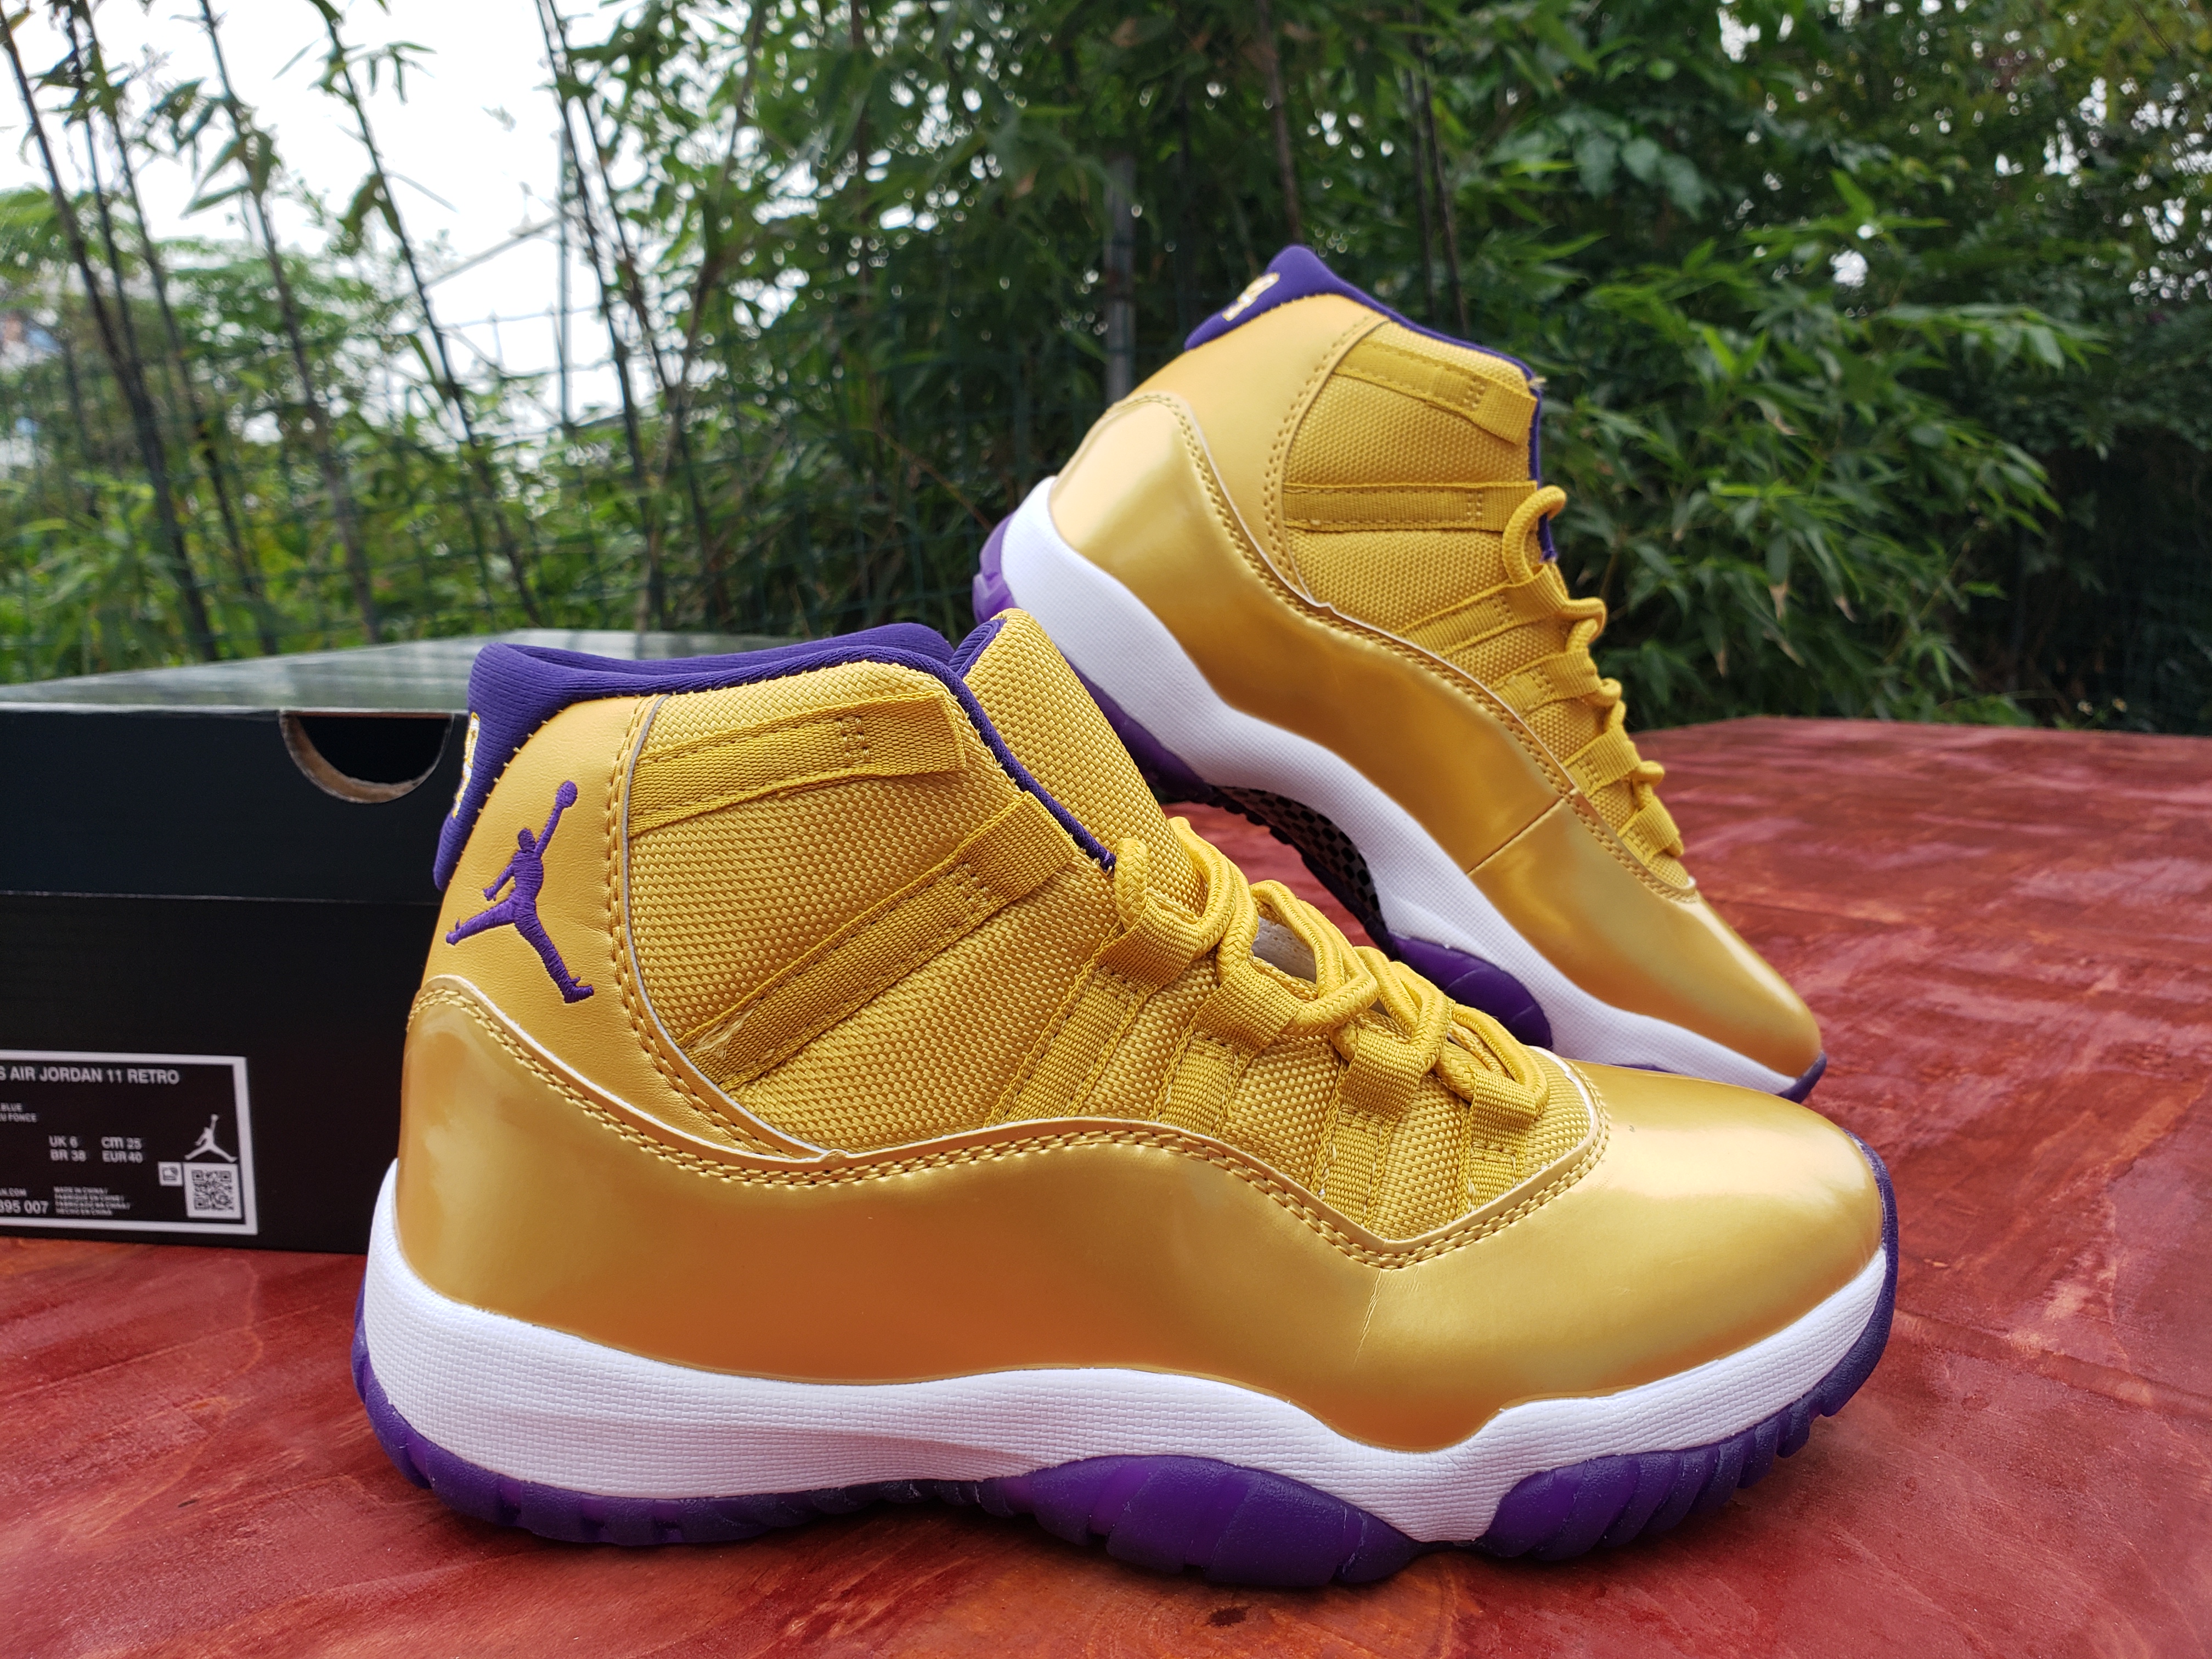 New Air Jordan 11 Retro High Gold Purple Basketball Shoes